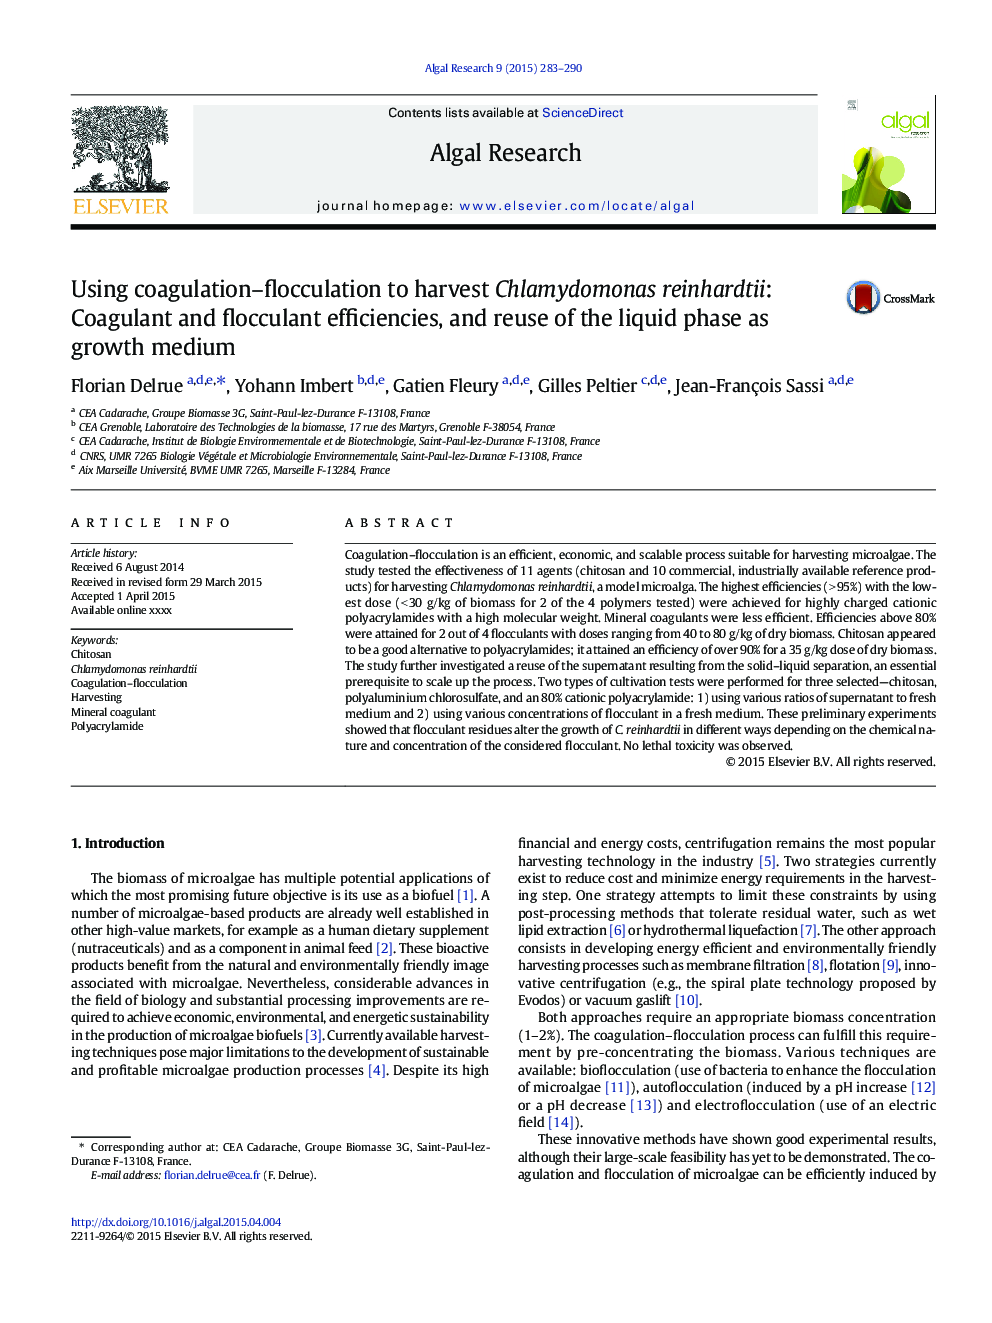 Using coagulation-flocculation to harvest Chlamydomonas reinhardtii: Coagulant and flocculant efficiencies, and reuse of the liquid phase as growth medium